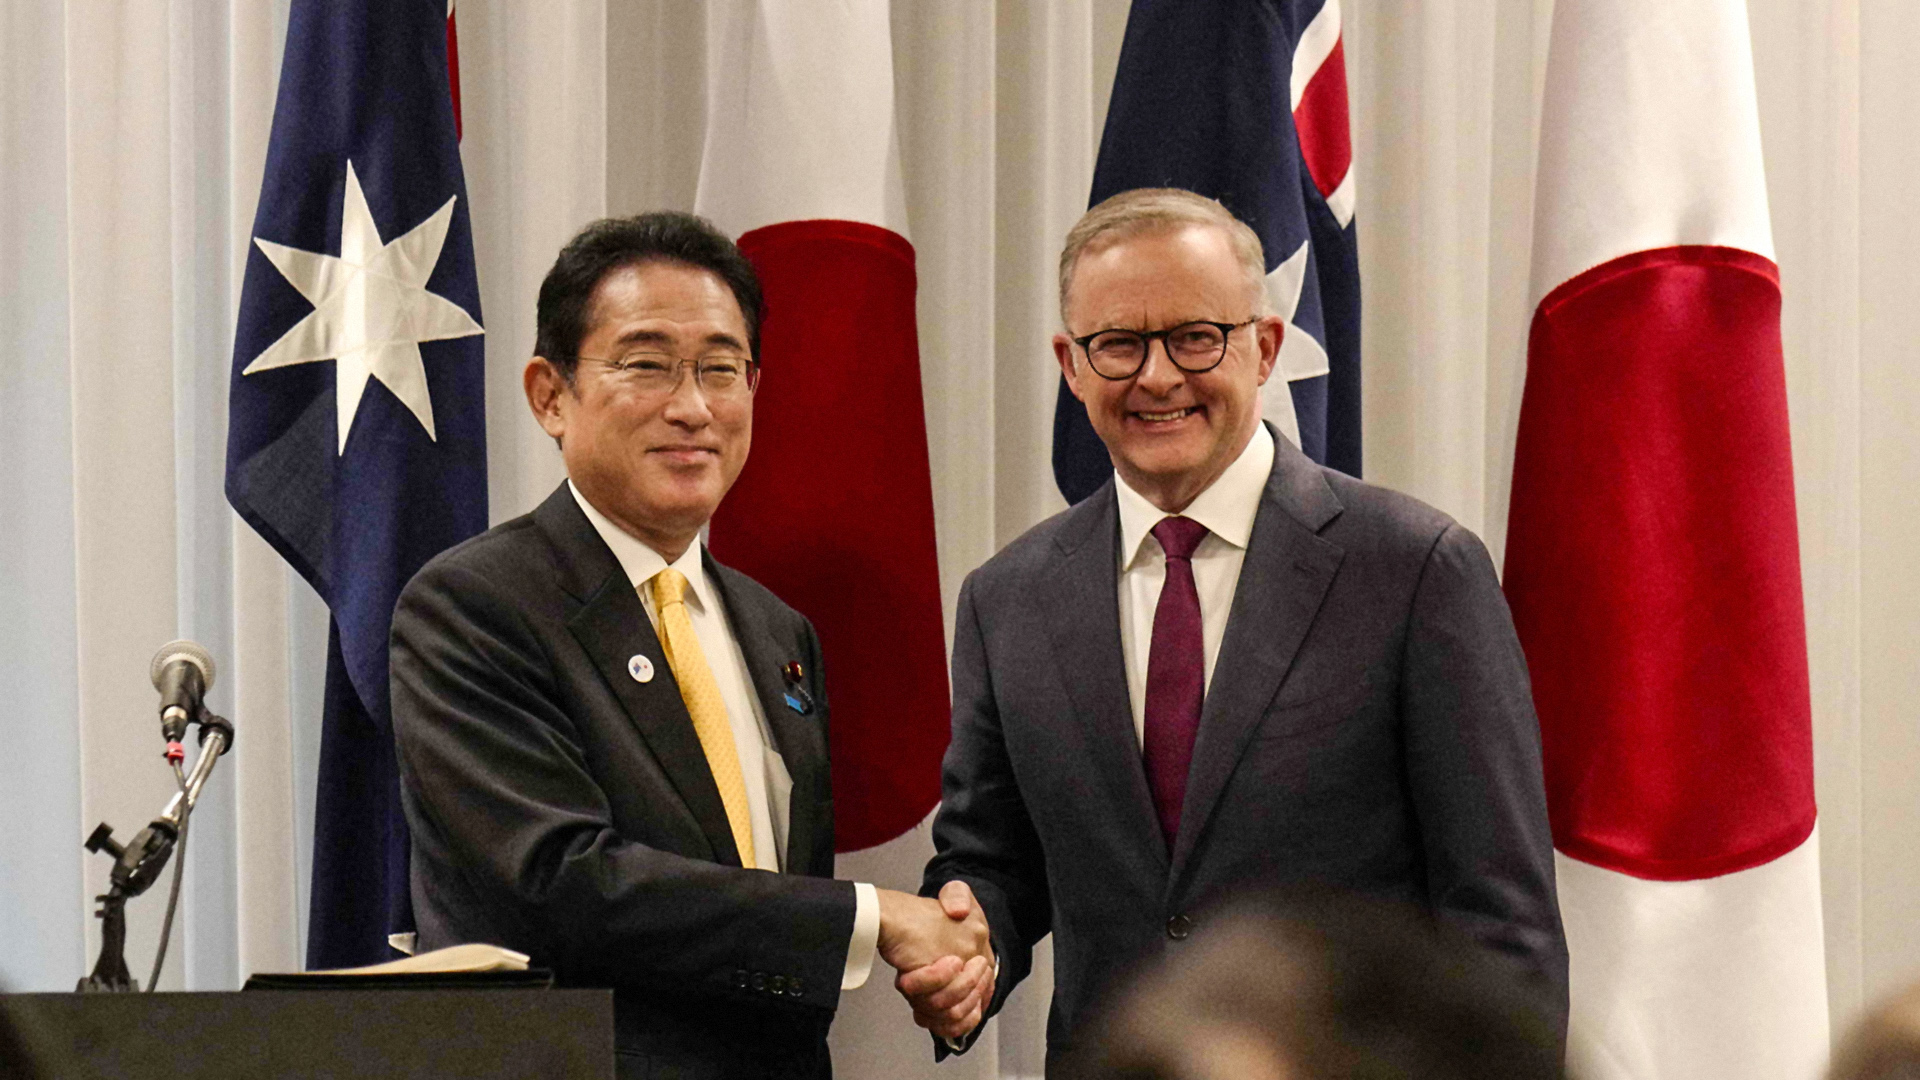 Treaty signed: Japan and Australia alliance